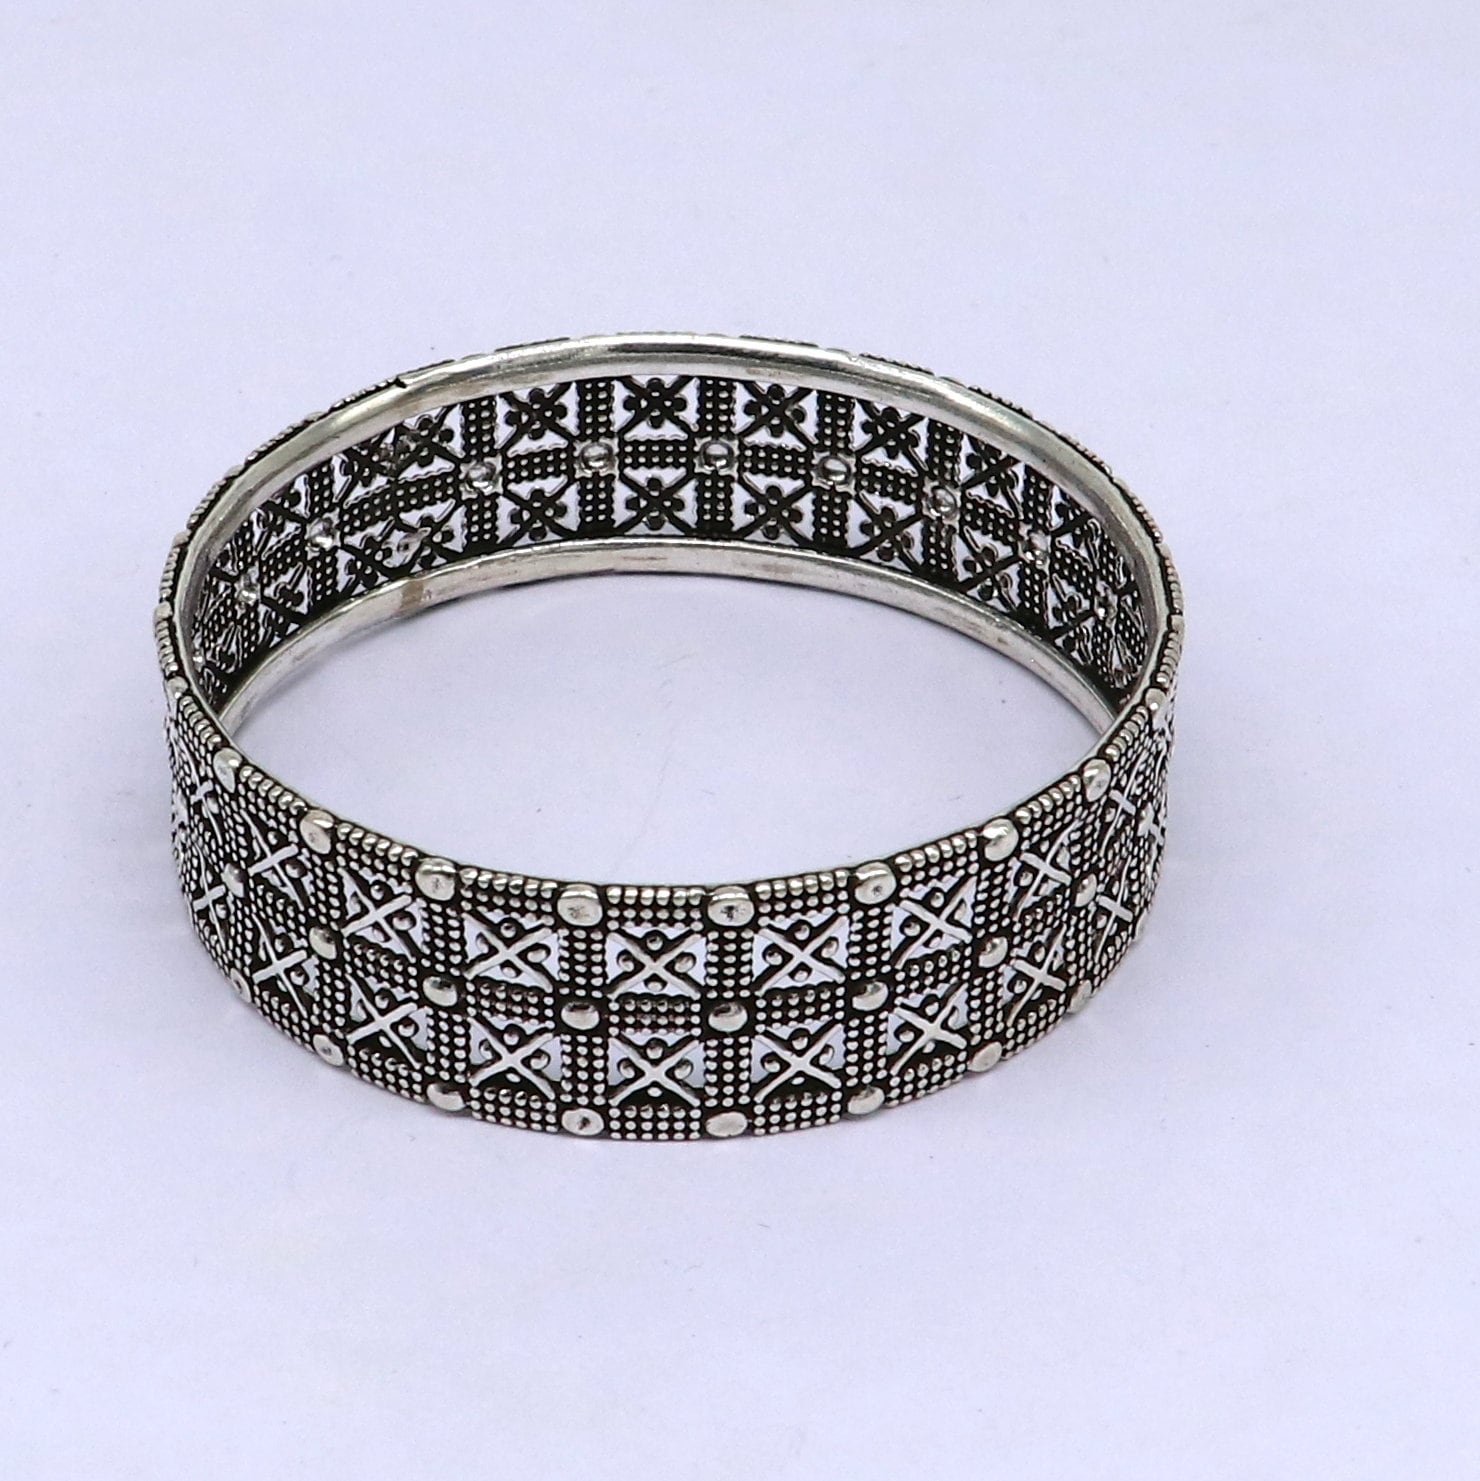 Exclusive 925 sterling silver amazing customized bangle bracelet kada , best brides gifting ethnic stylish tribal fashion jewelry nba397 - TRIBAL ORNAMENTS